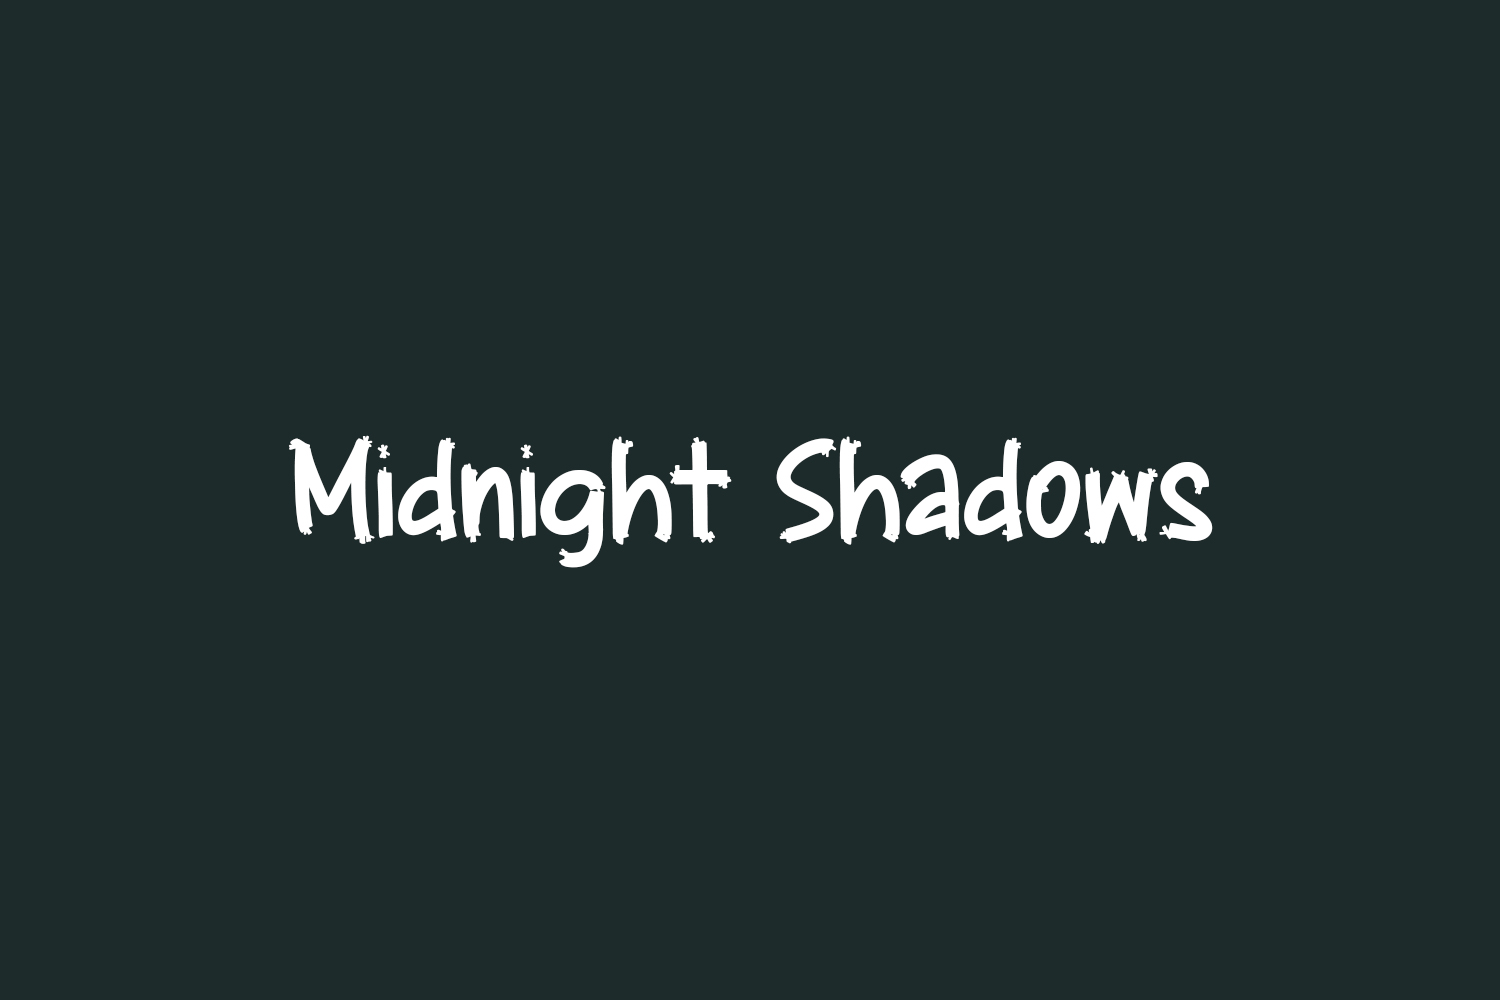 Midnight Shadows Free Font